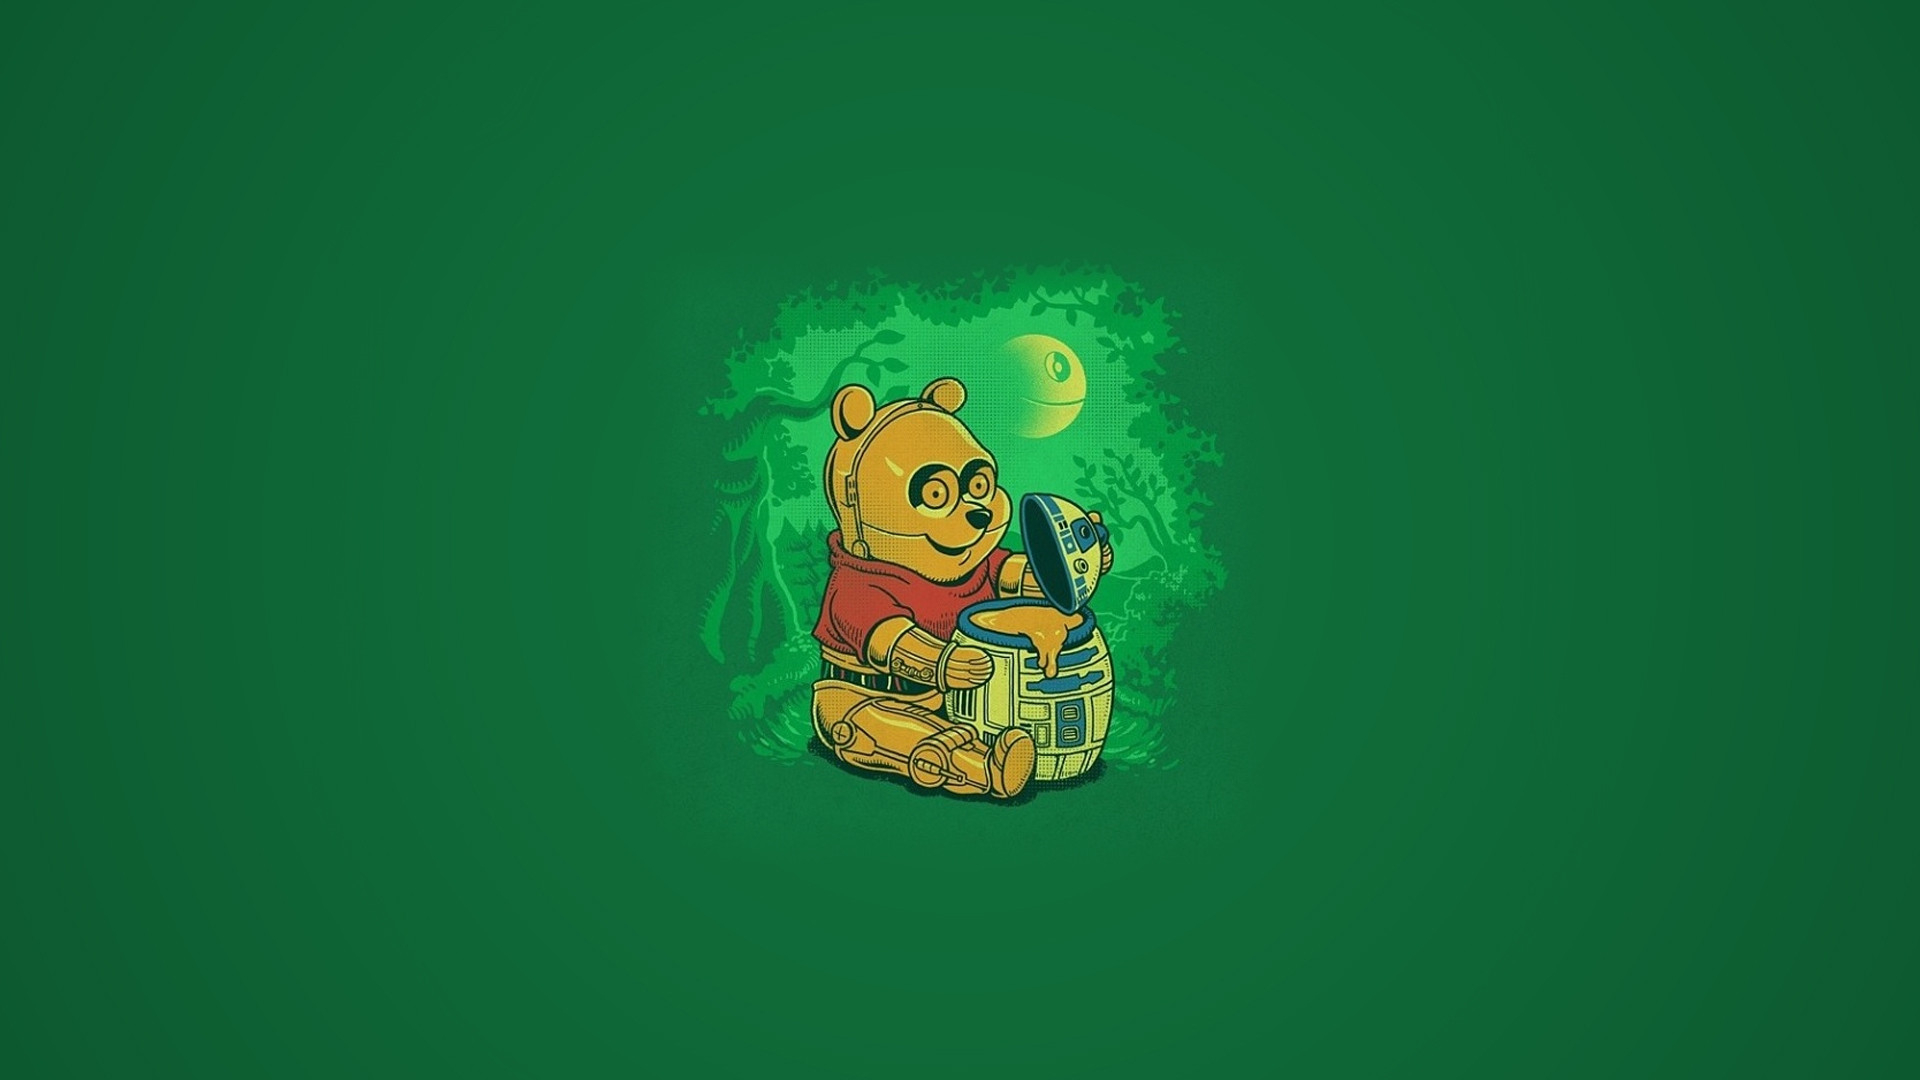 1920x1080 Somewhat creepy) Star-Wars/Winnie the Pooh. [] Imgur